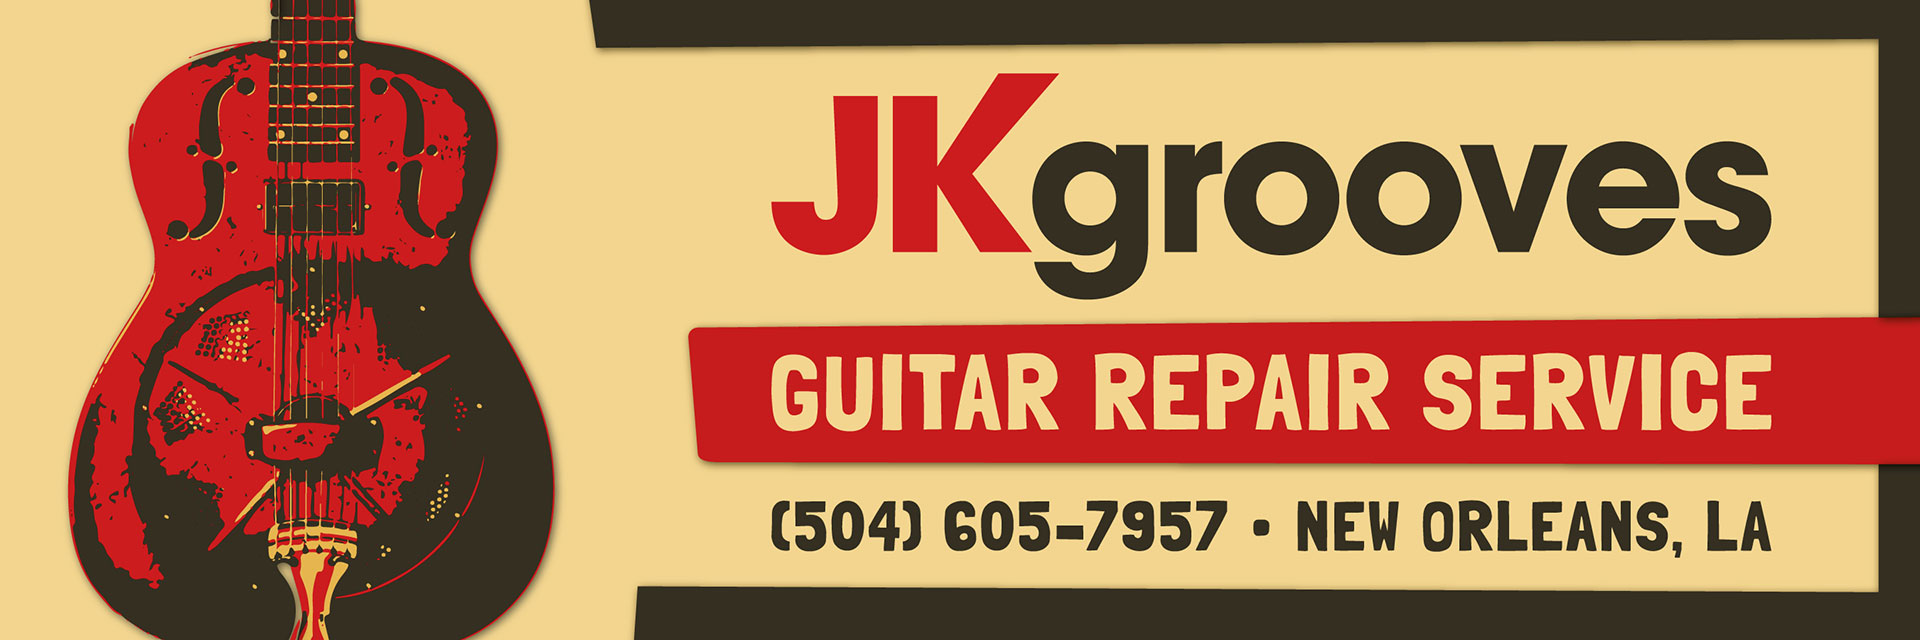 JK Grooves Bumper Sticker